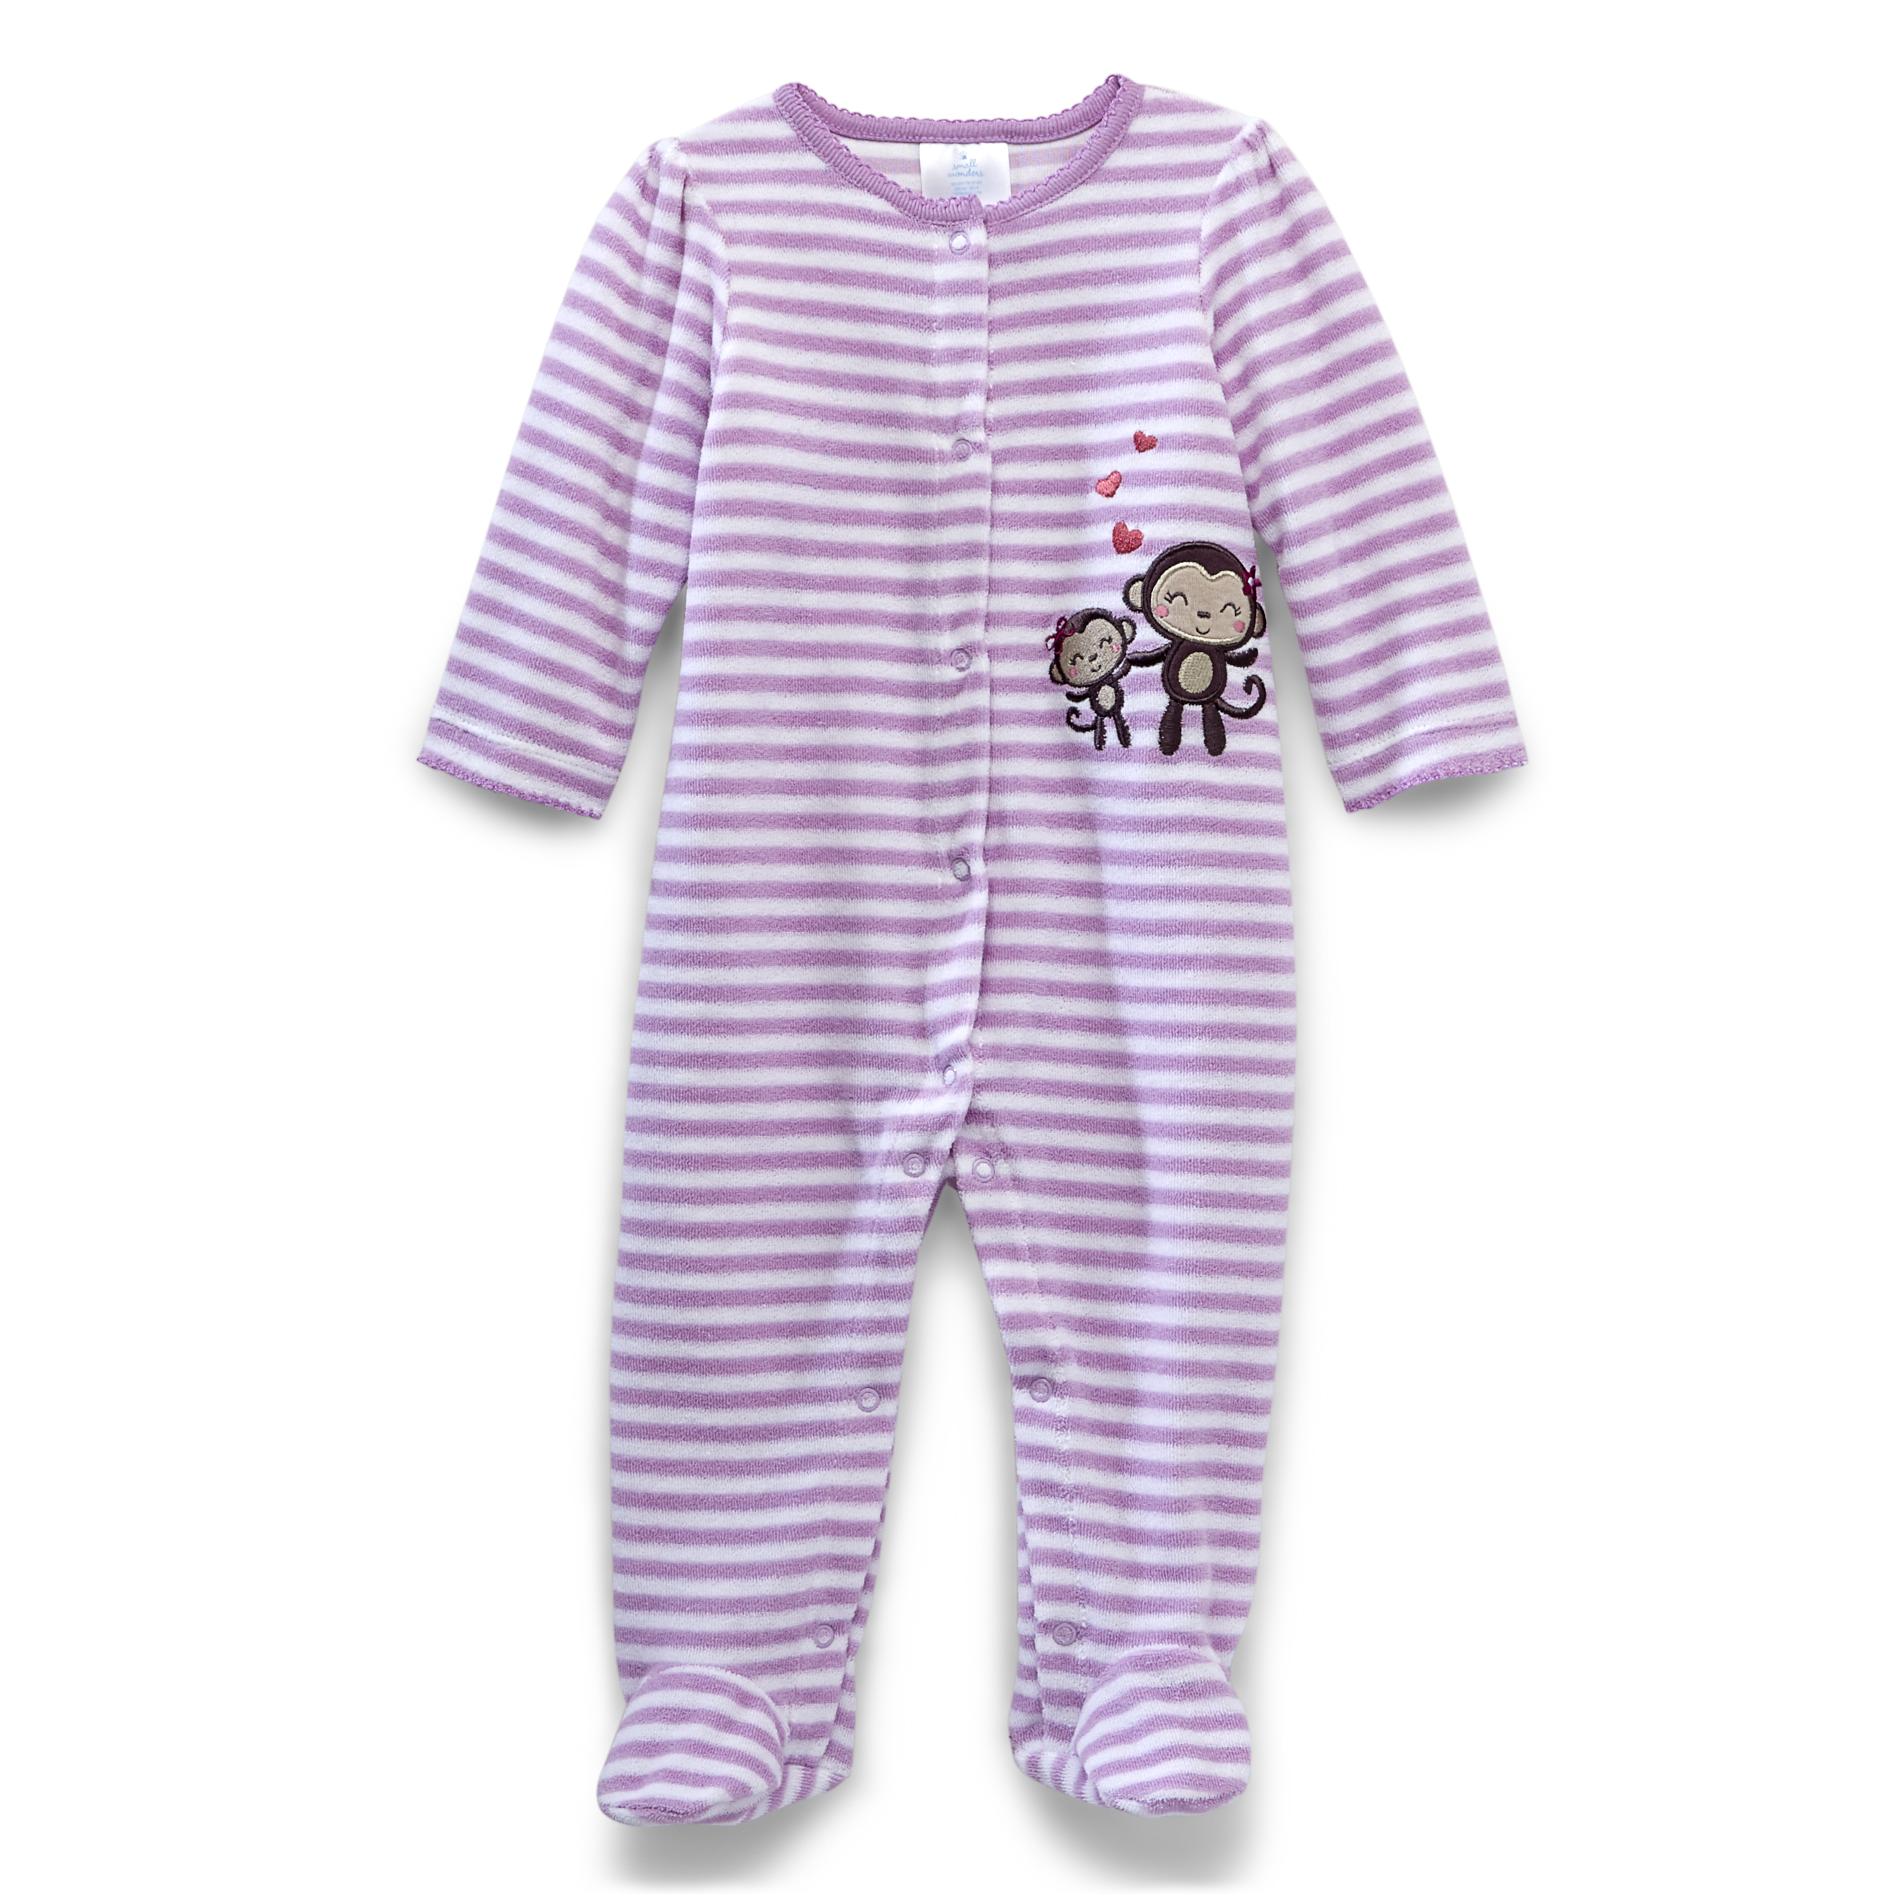 Small Wonders Newborn Girl's Footed Terry Sleeper Pajamas - Monkey